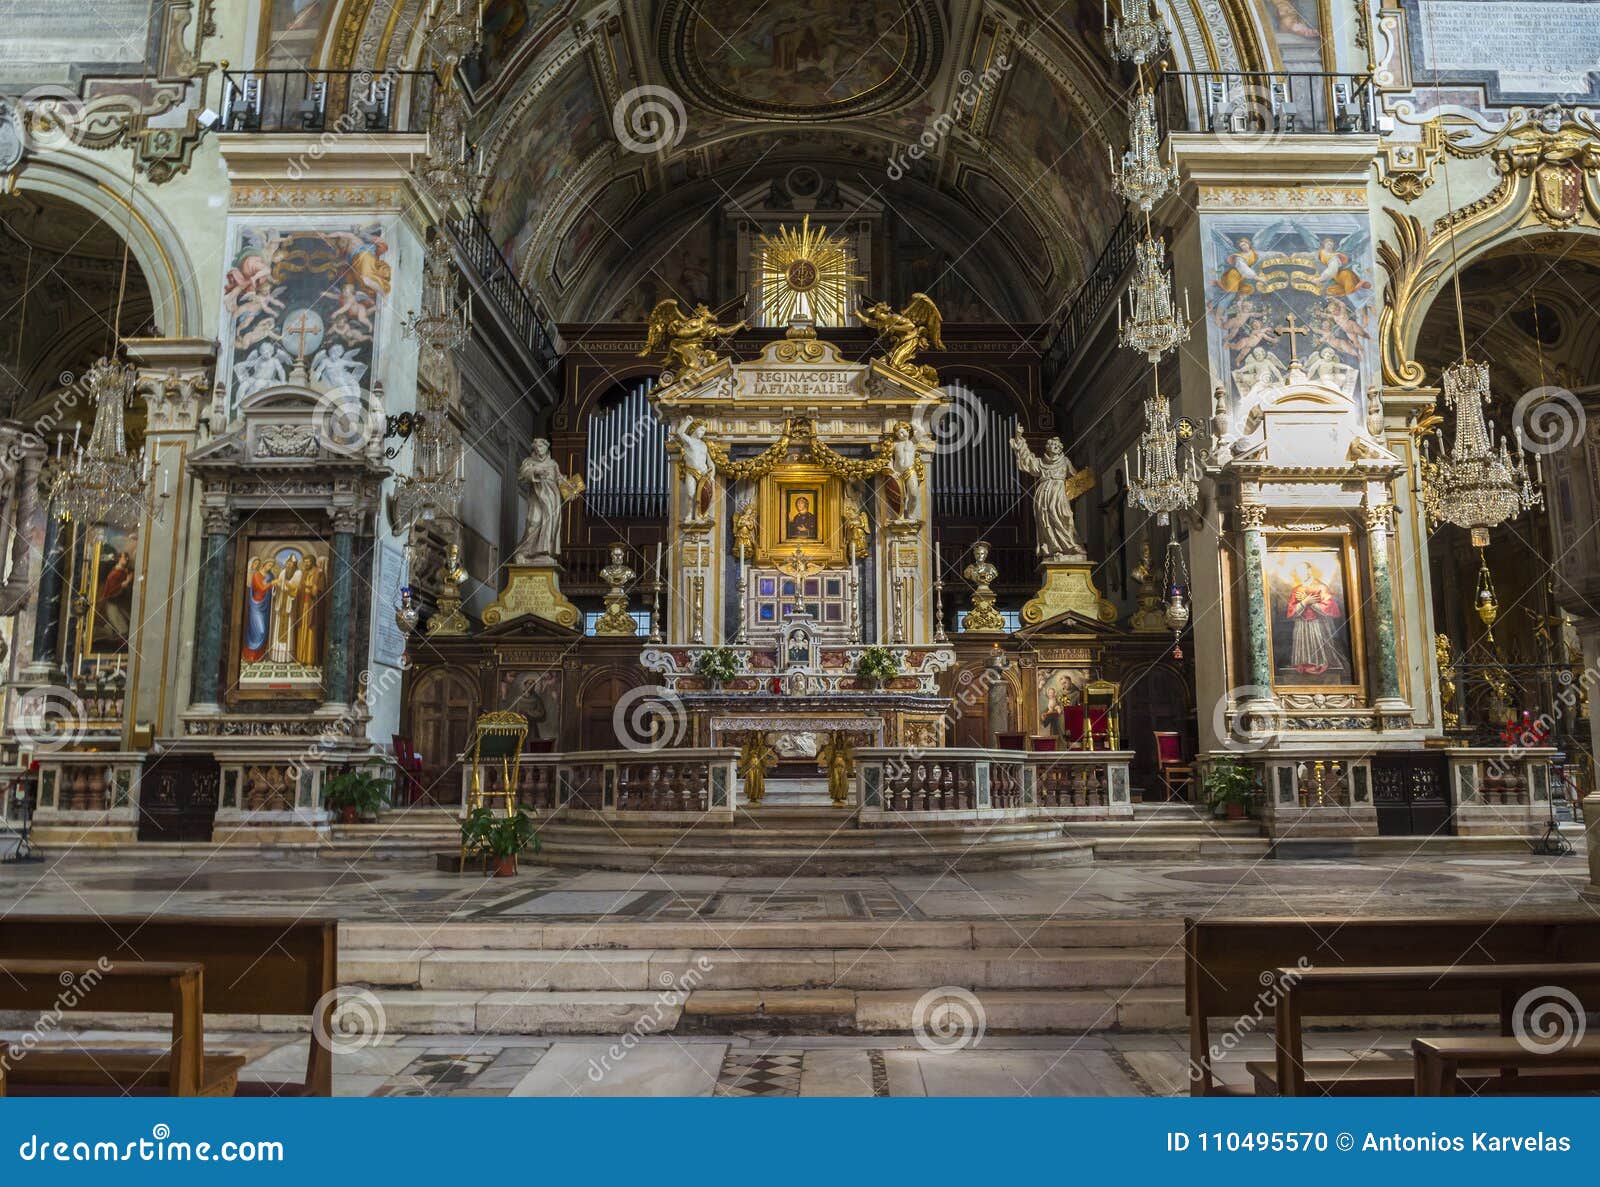 Hurtigt En sætning trappe The Basilica of Santa Maria in Aracoeli, Rome, Italy Stock Photo - Image of  catholic, column: 110495570